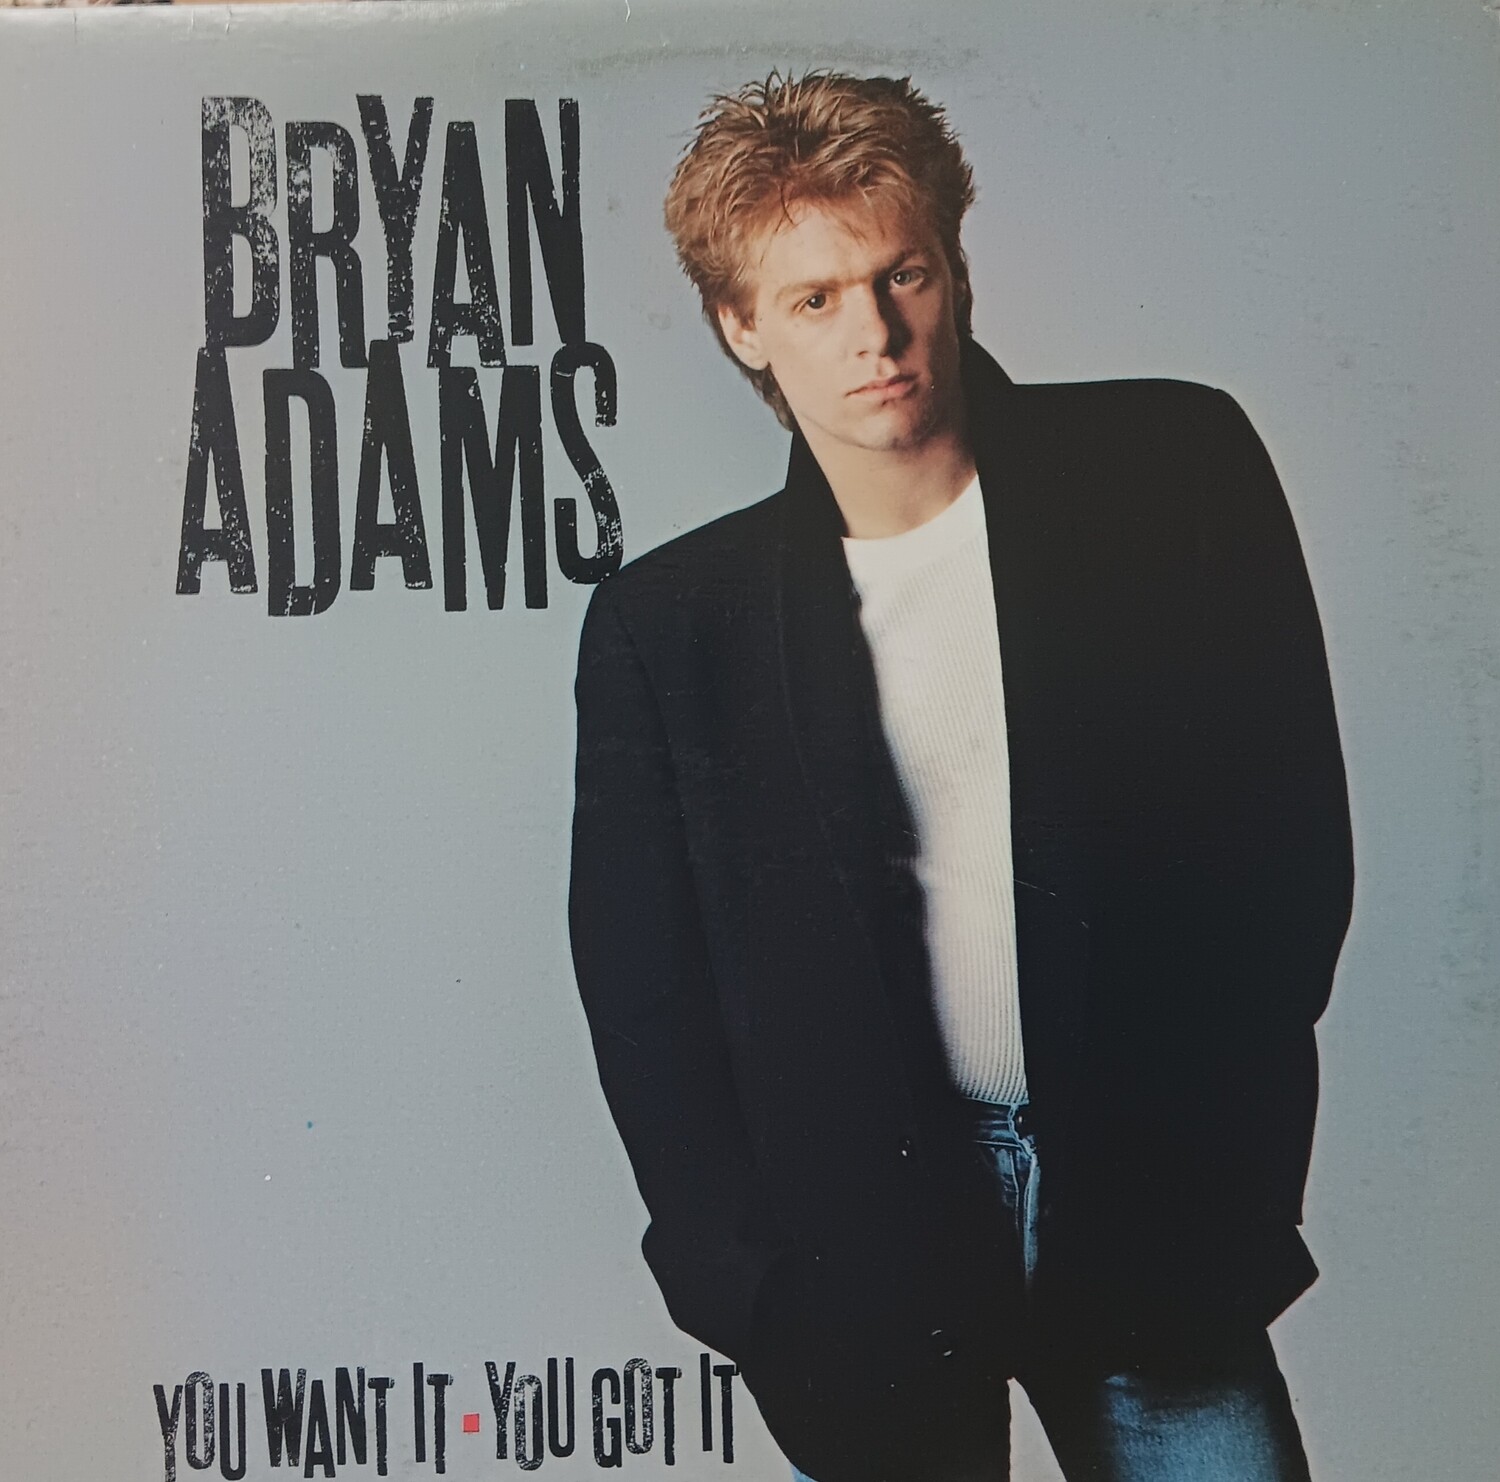 BRYAN ADAMS - You want it you got it